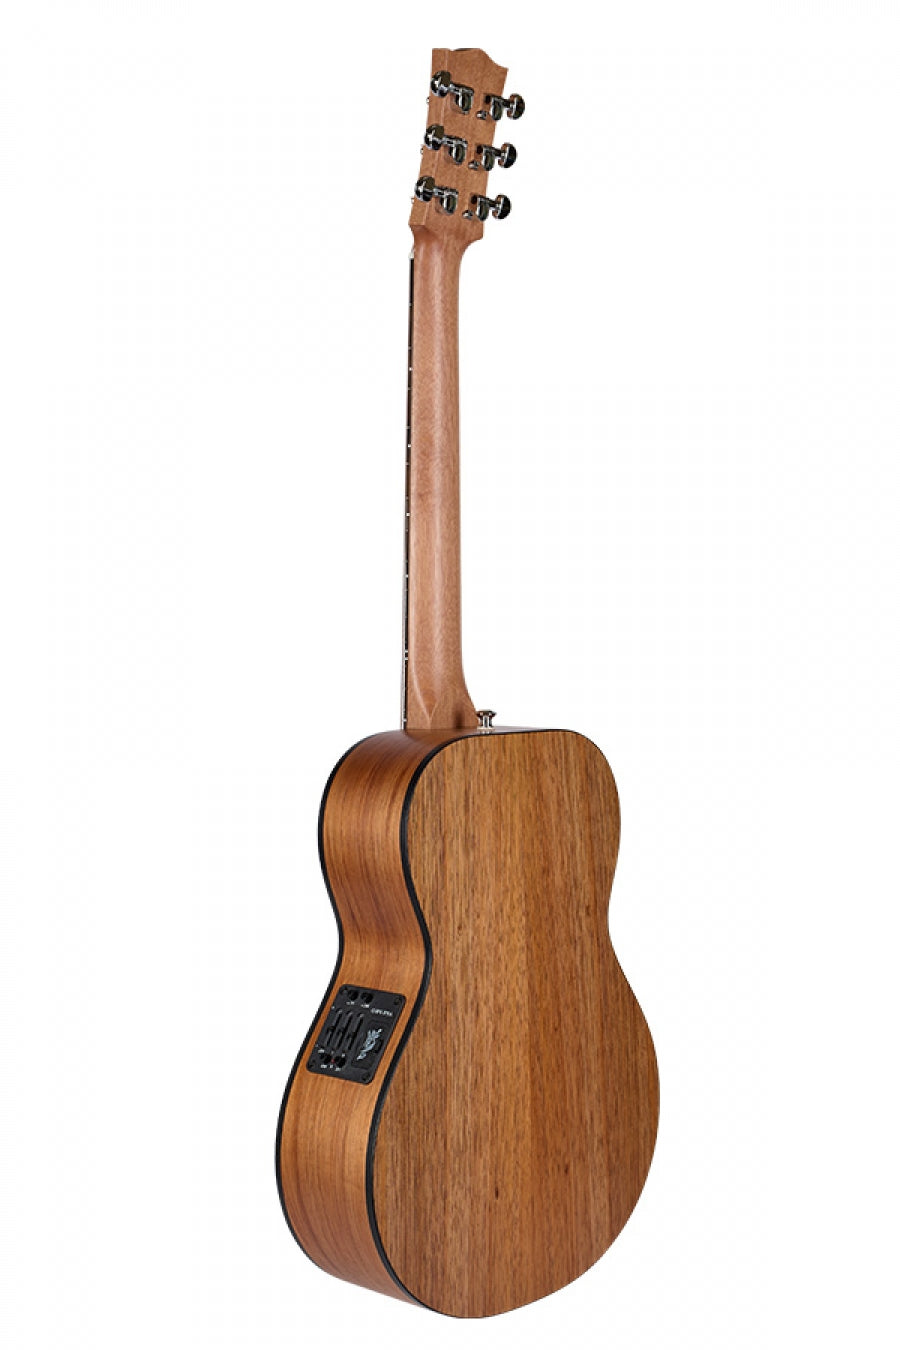 Maton Mini EMBW6 Blackwood Acoustic Guitar